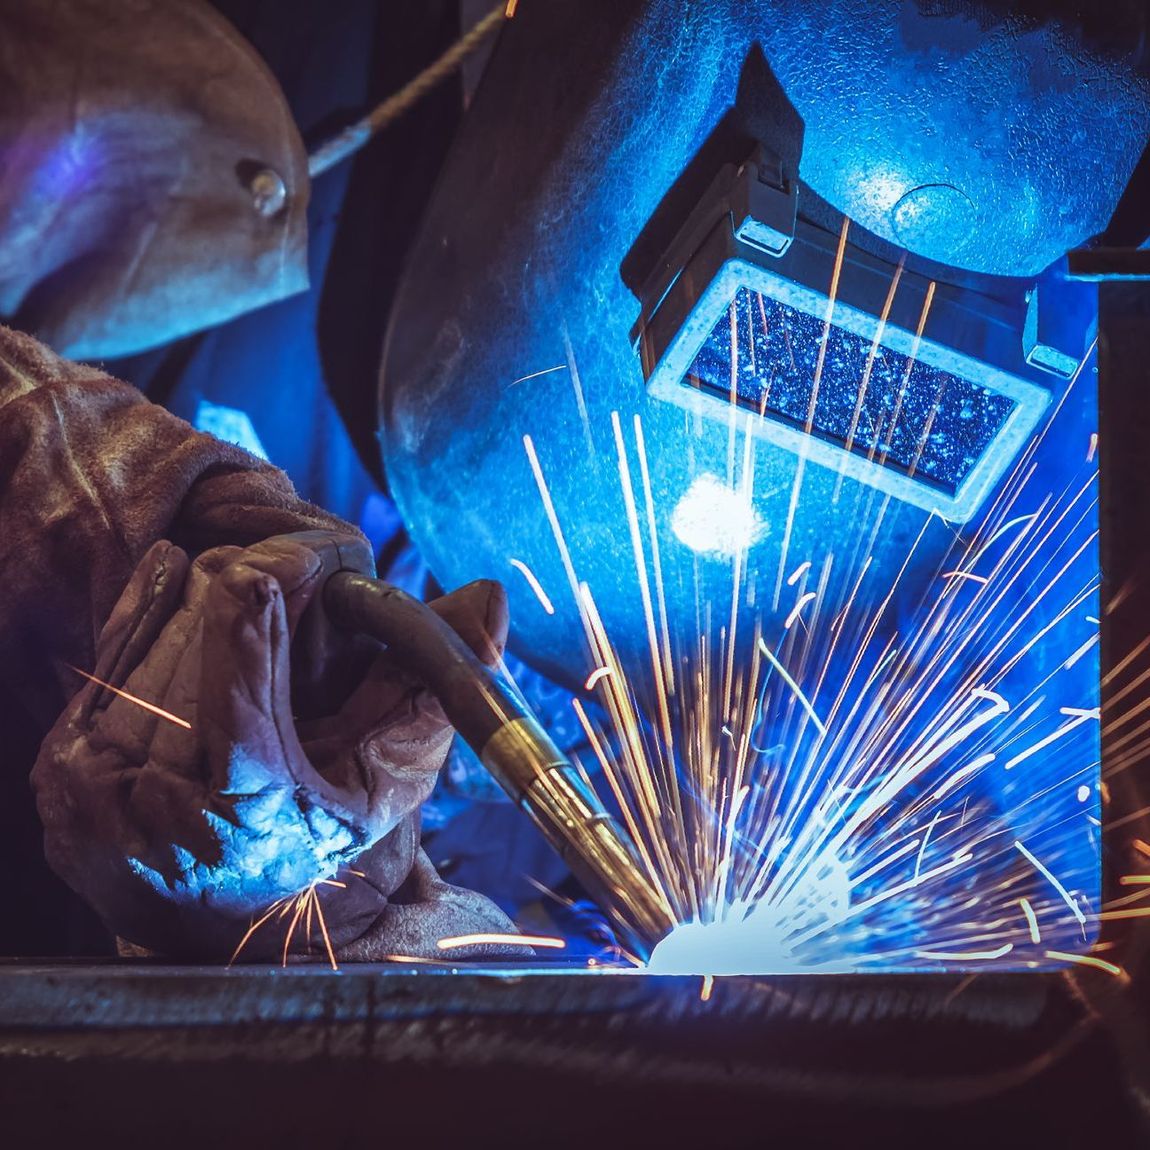 a man wearing a welding mask is welding a piece of metal